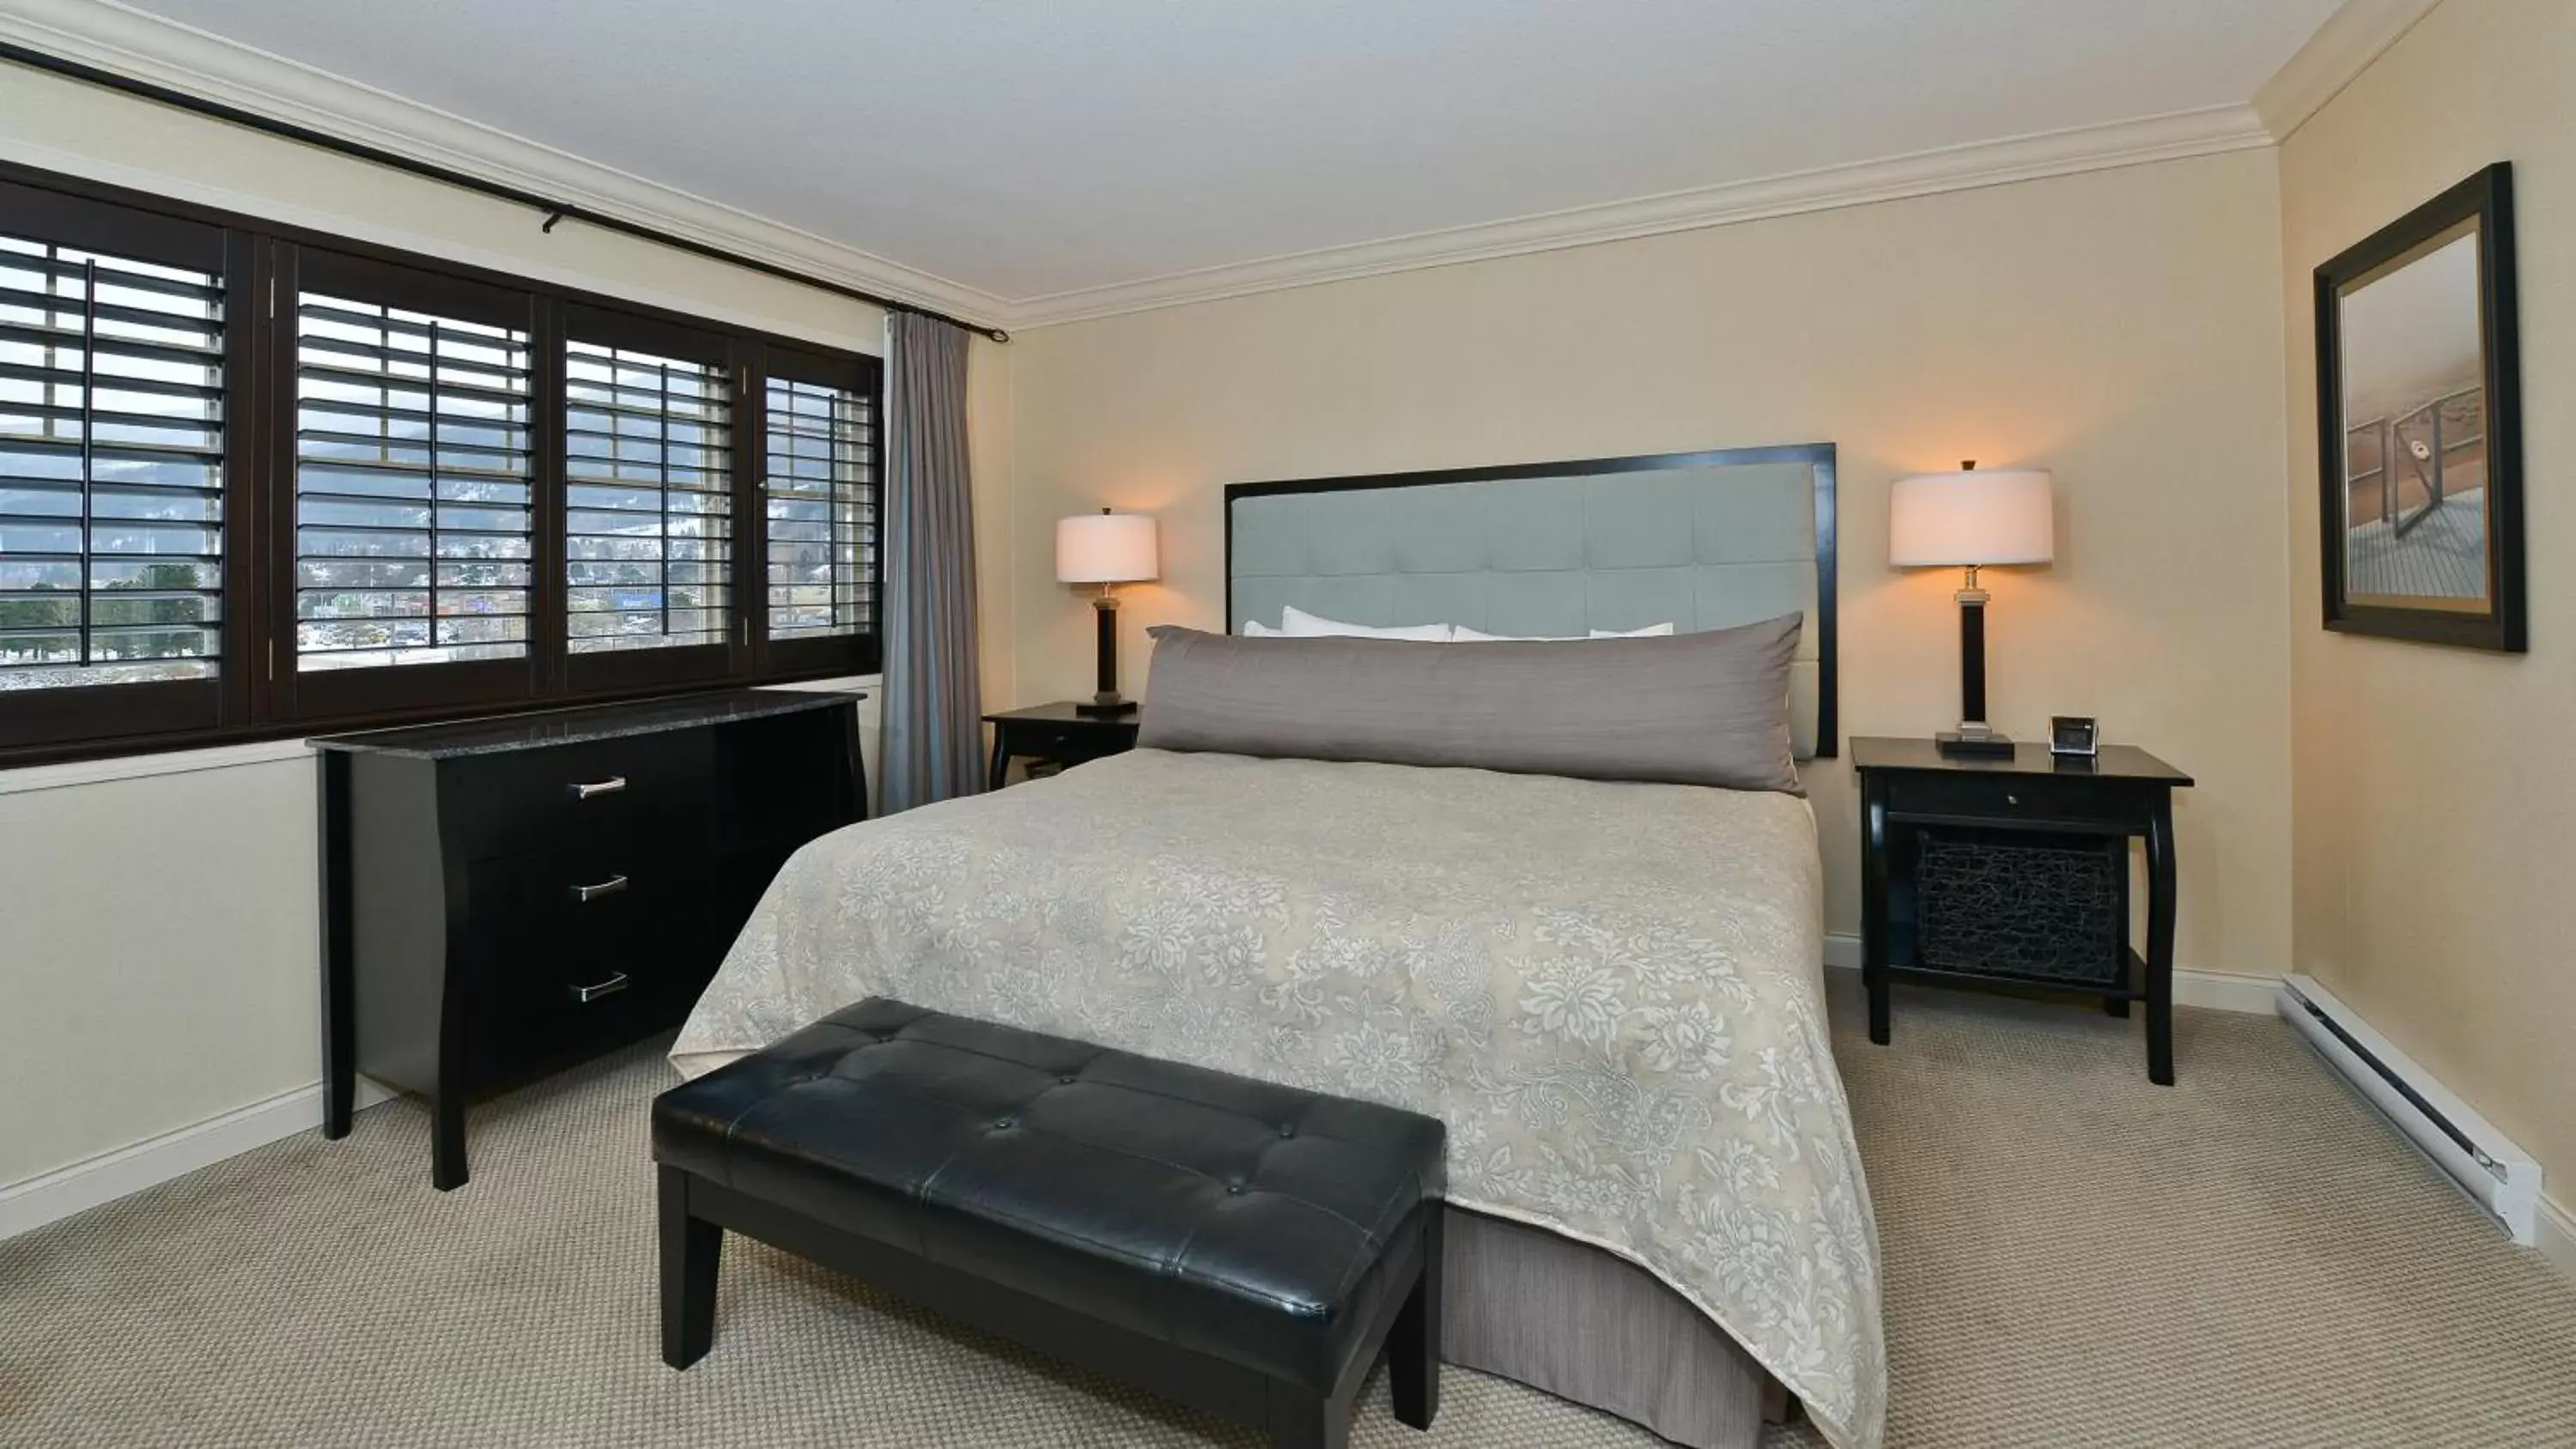 Bed, Room Photo in Prestige Lakeside Resort, WorldHotels Elite